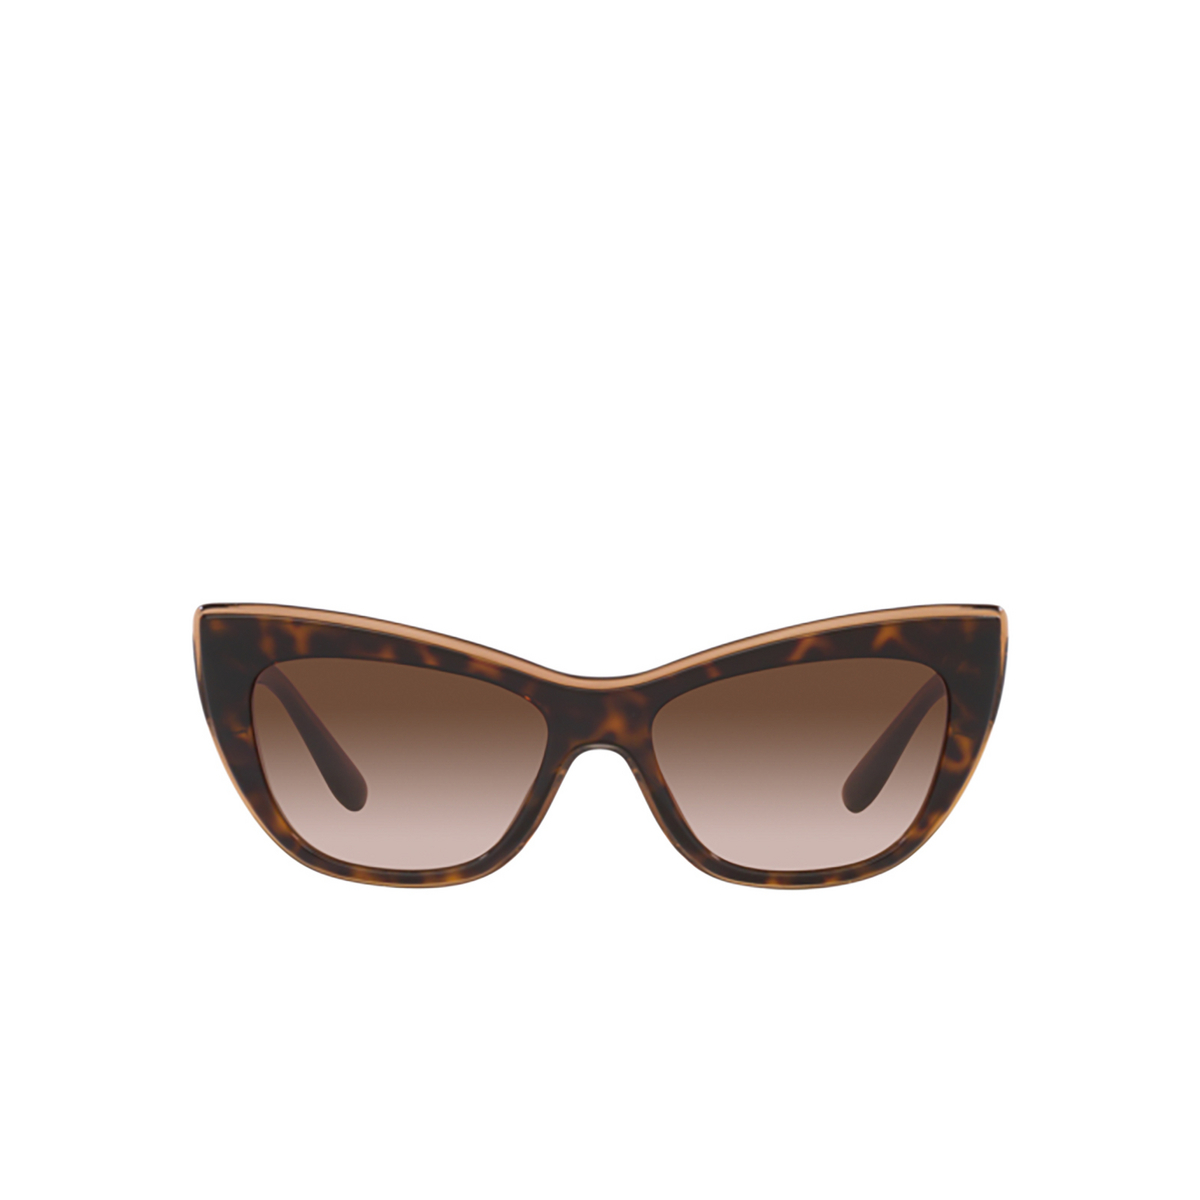 Dolce & Gabbana DG4417 Sunglasses 325613 Havana / Transparent Brown - front view